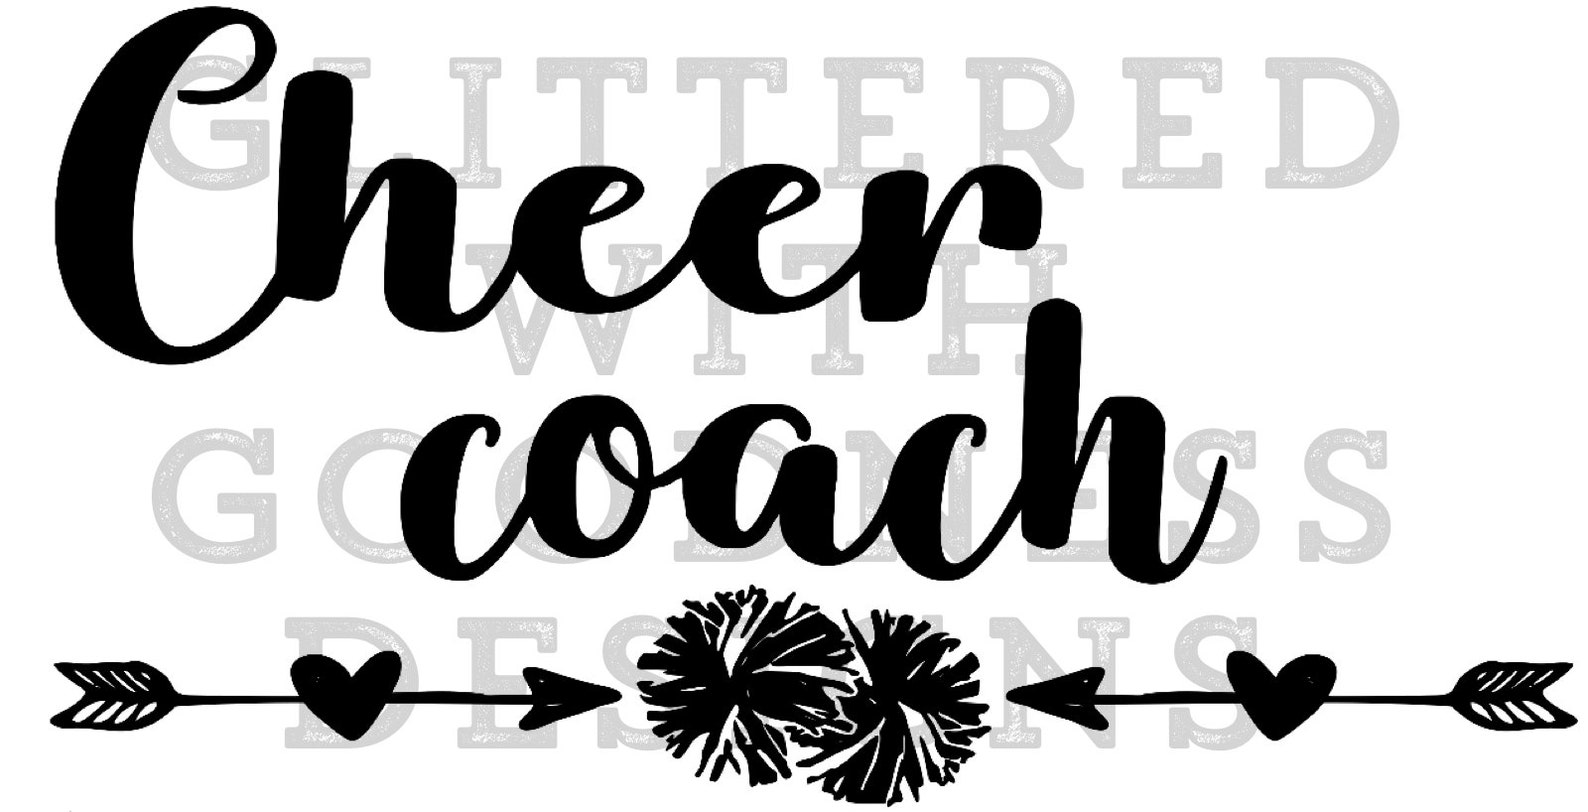 Cheer Coach SVG | Etsy